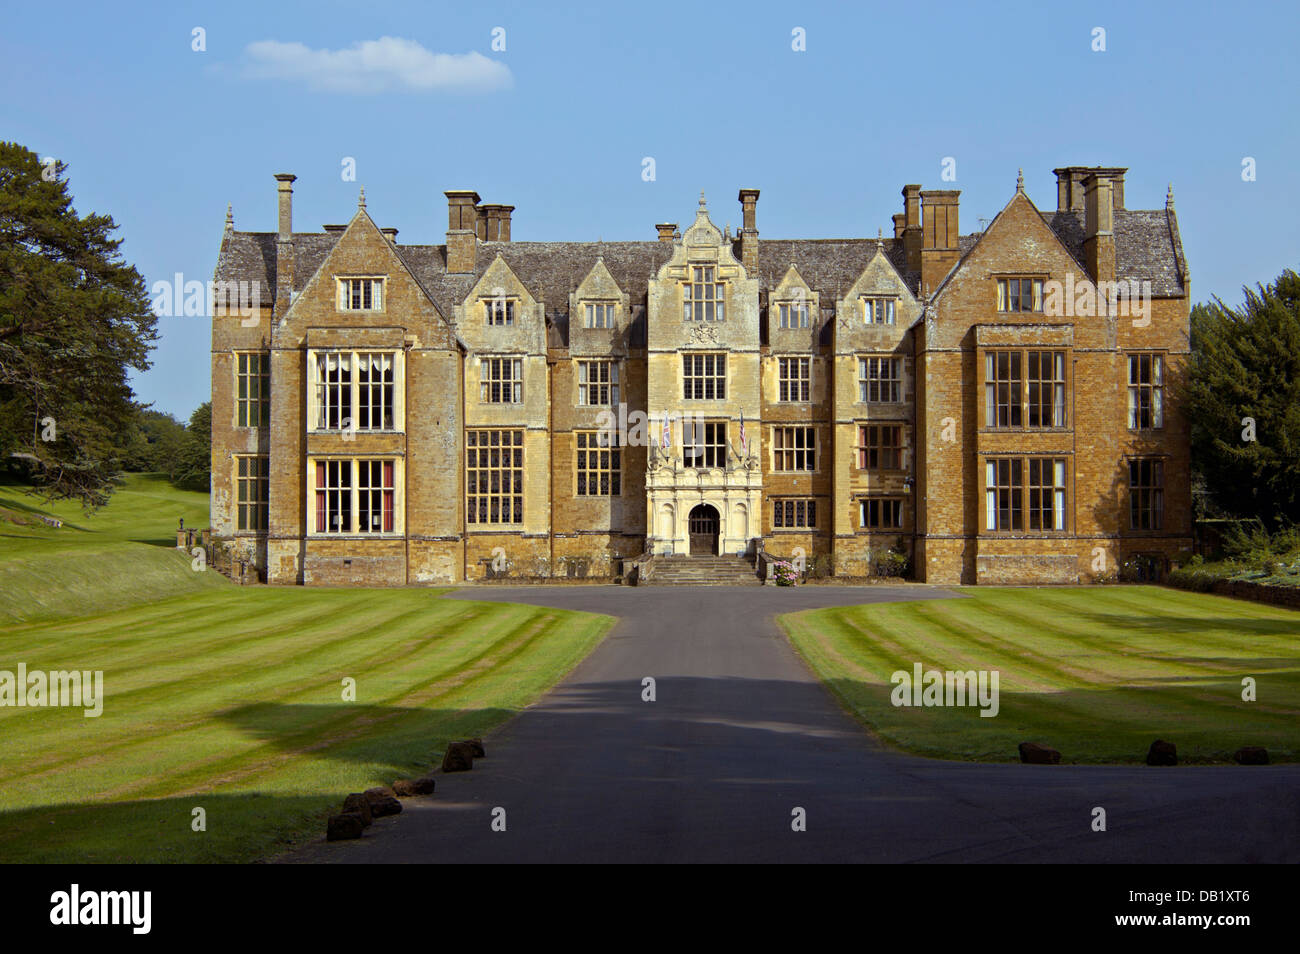 Façade of Wroxton Abbey, a Jacobean house, Wroxton, Oxfordshire, England, Great Britain. Stock Photo